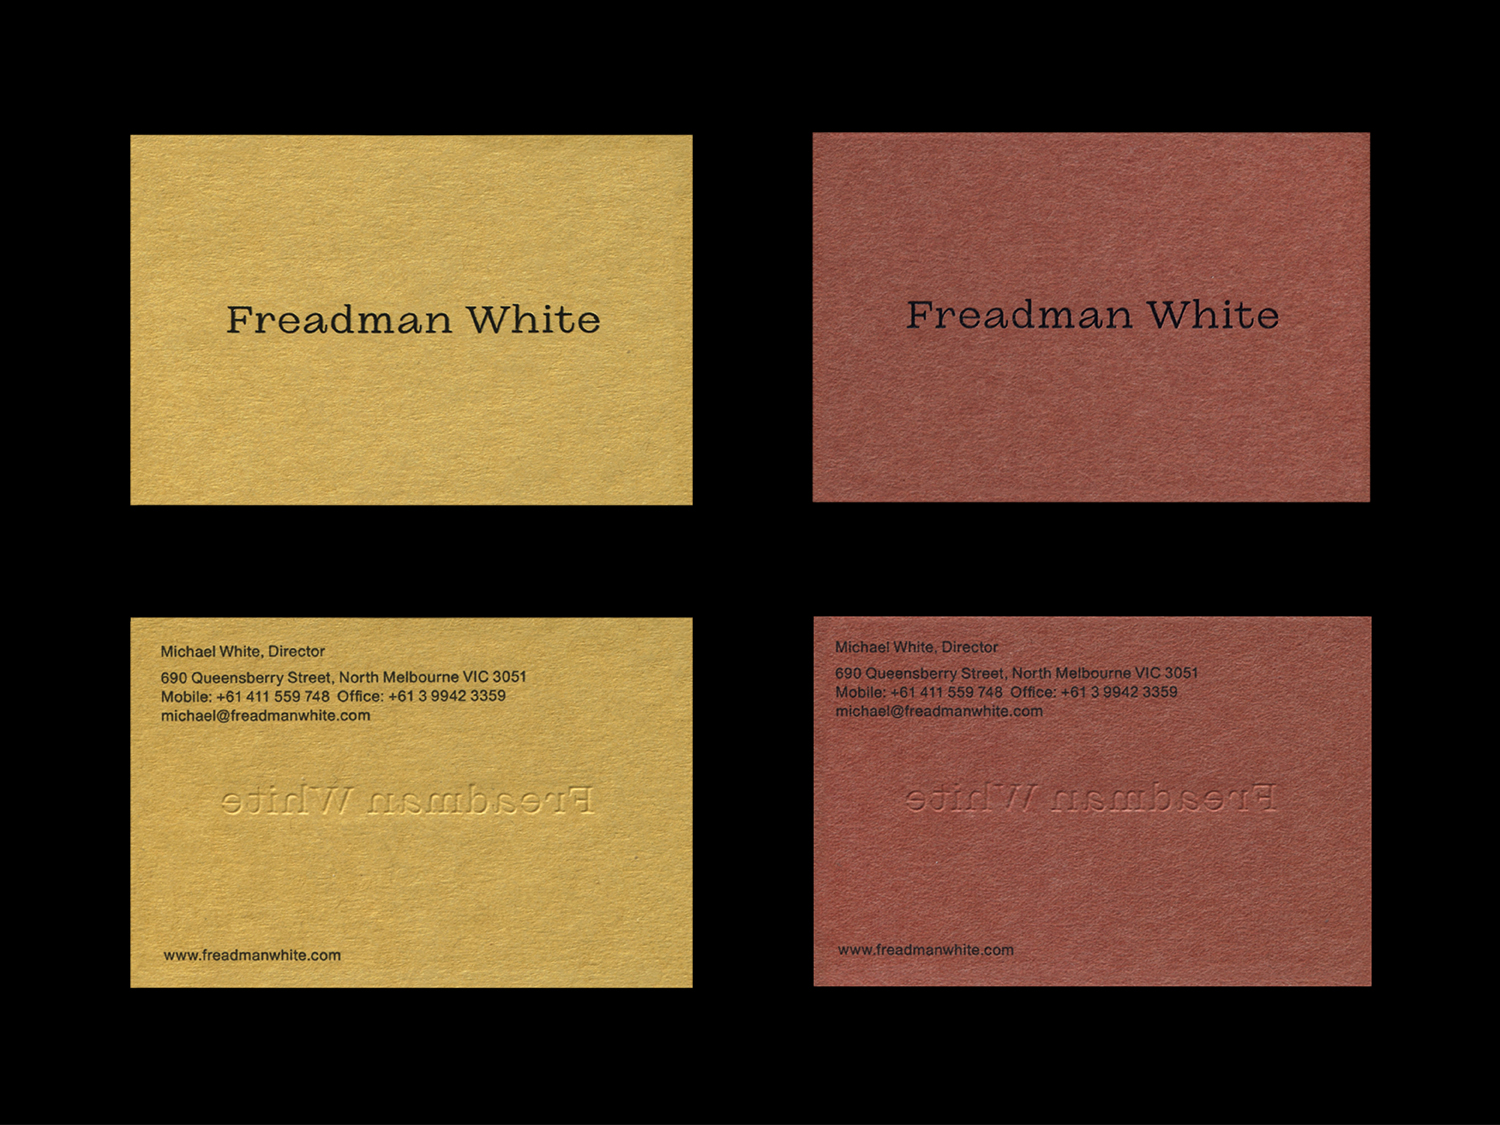 Creative Business Cards – Freadman White by Studio Hi Ho